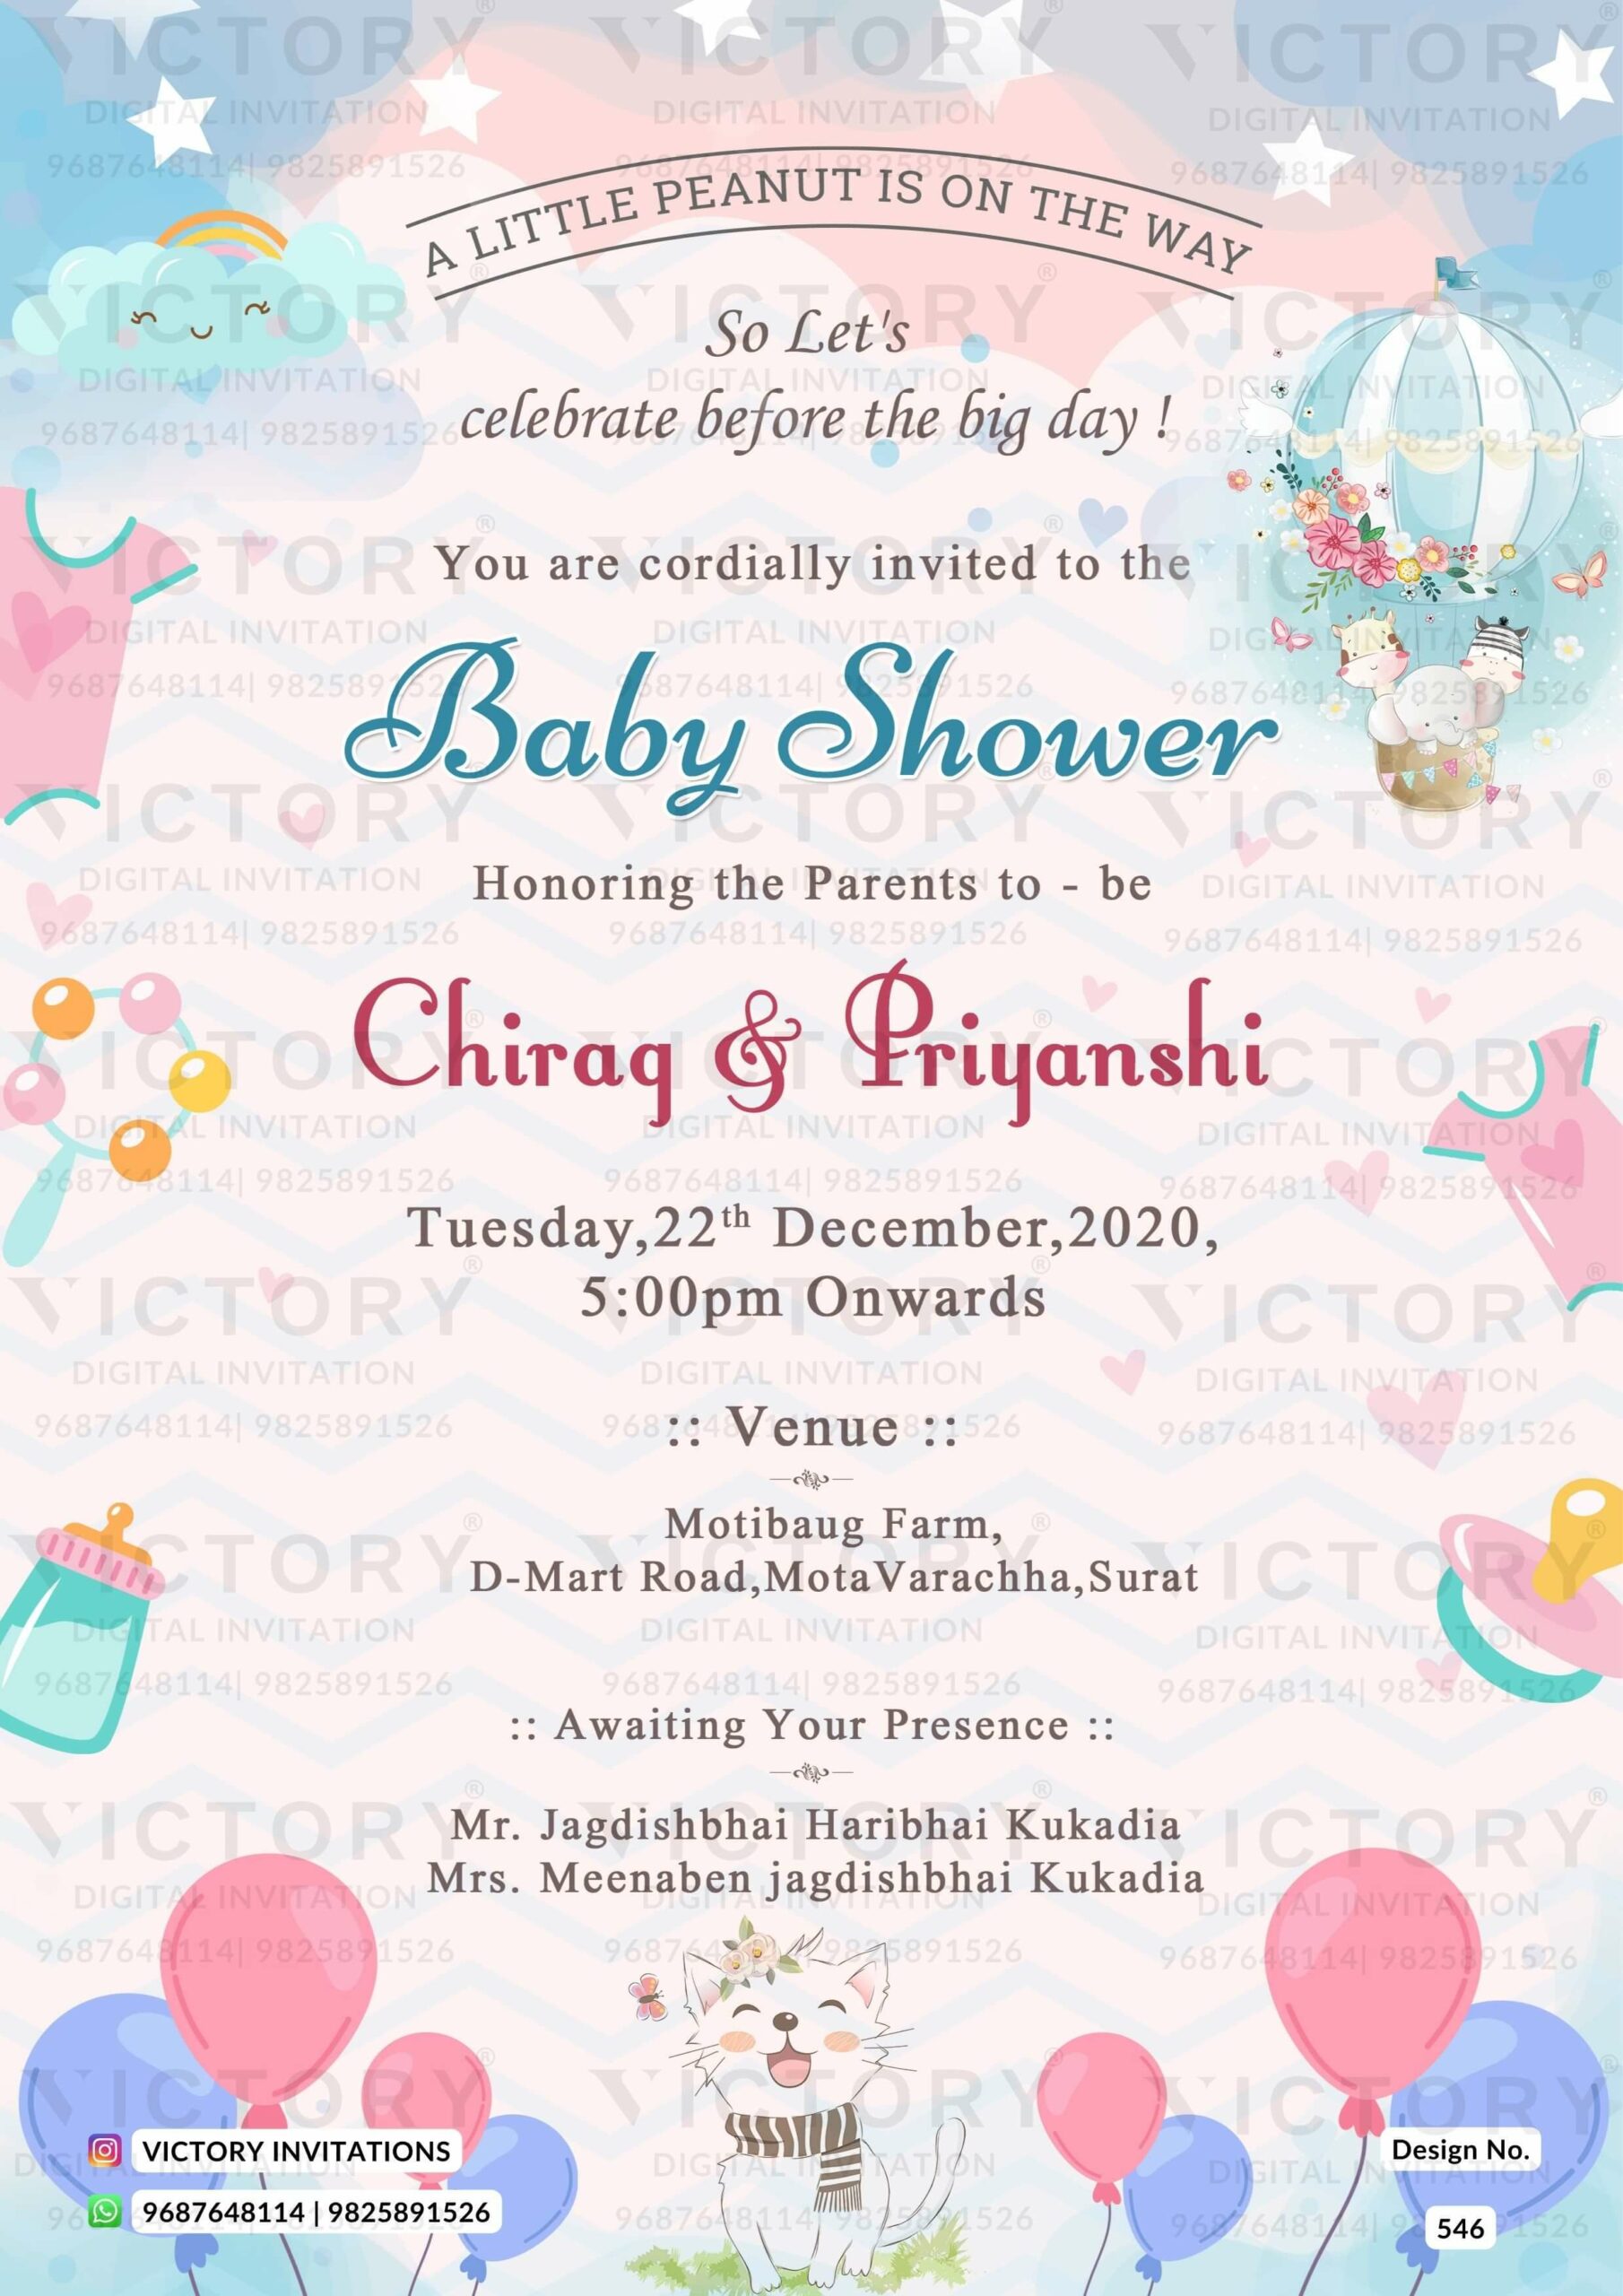 Baby Shower digital invitation card in english design no.546